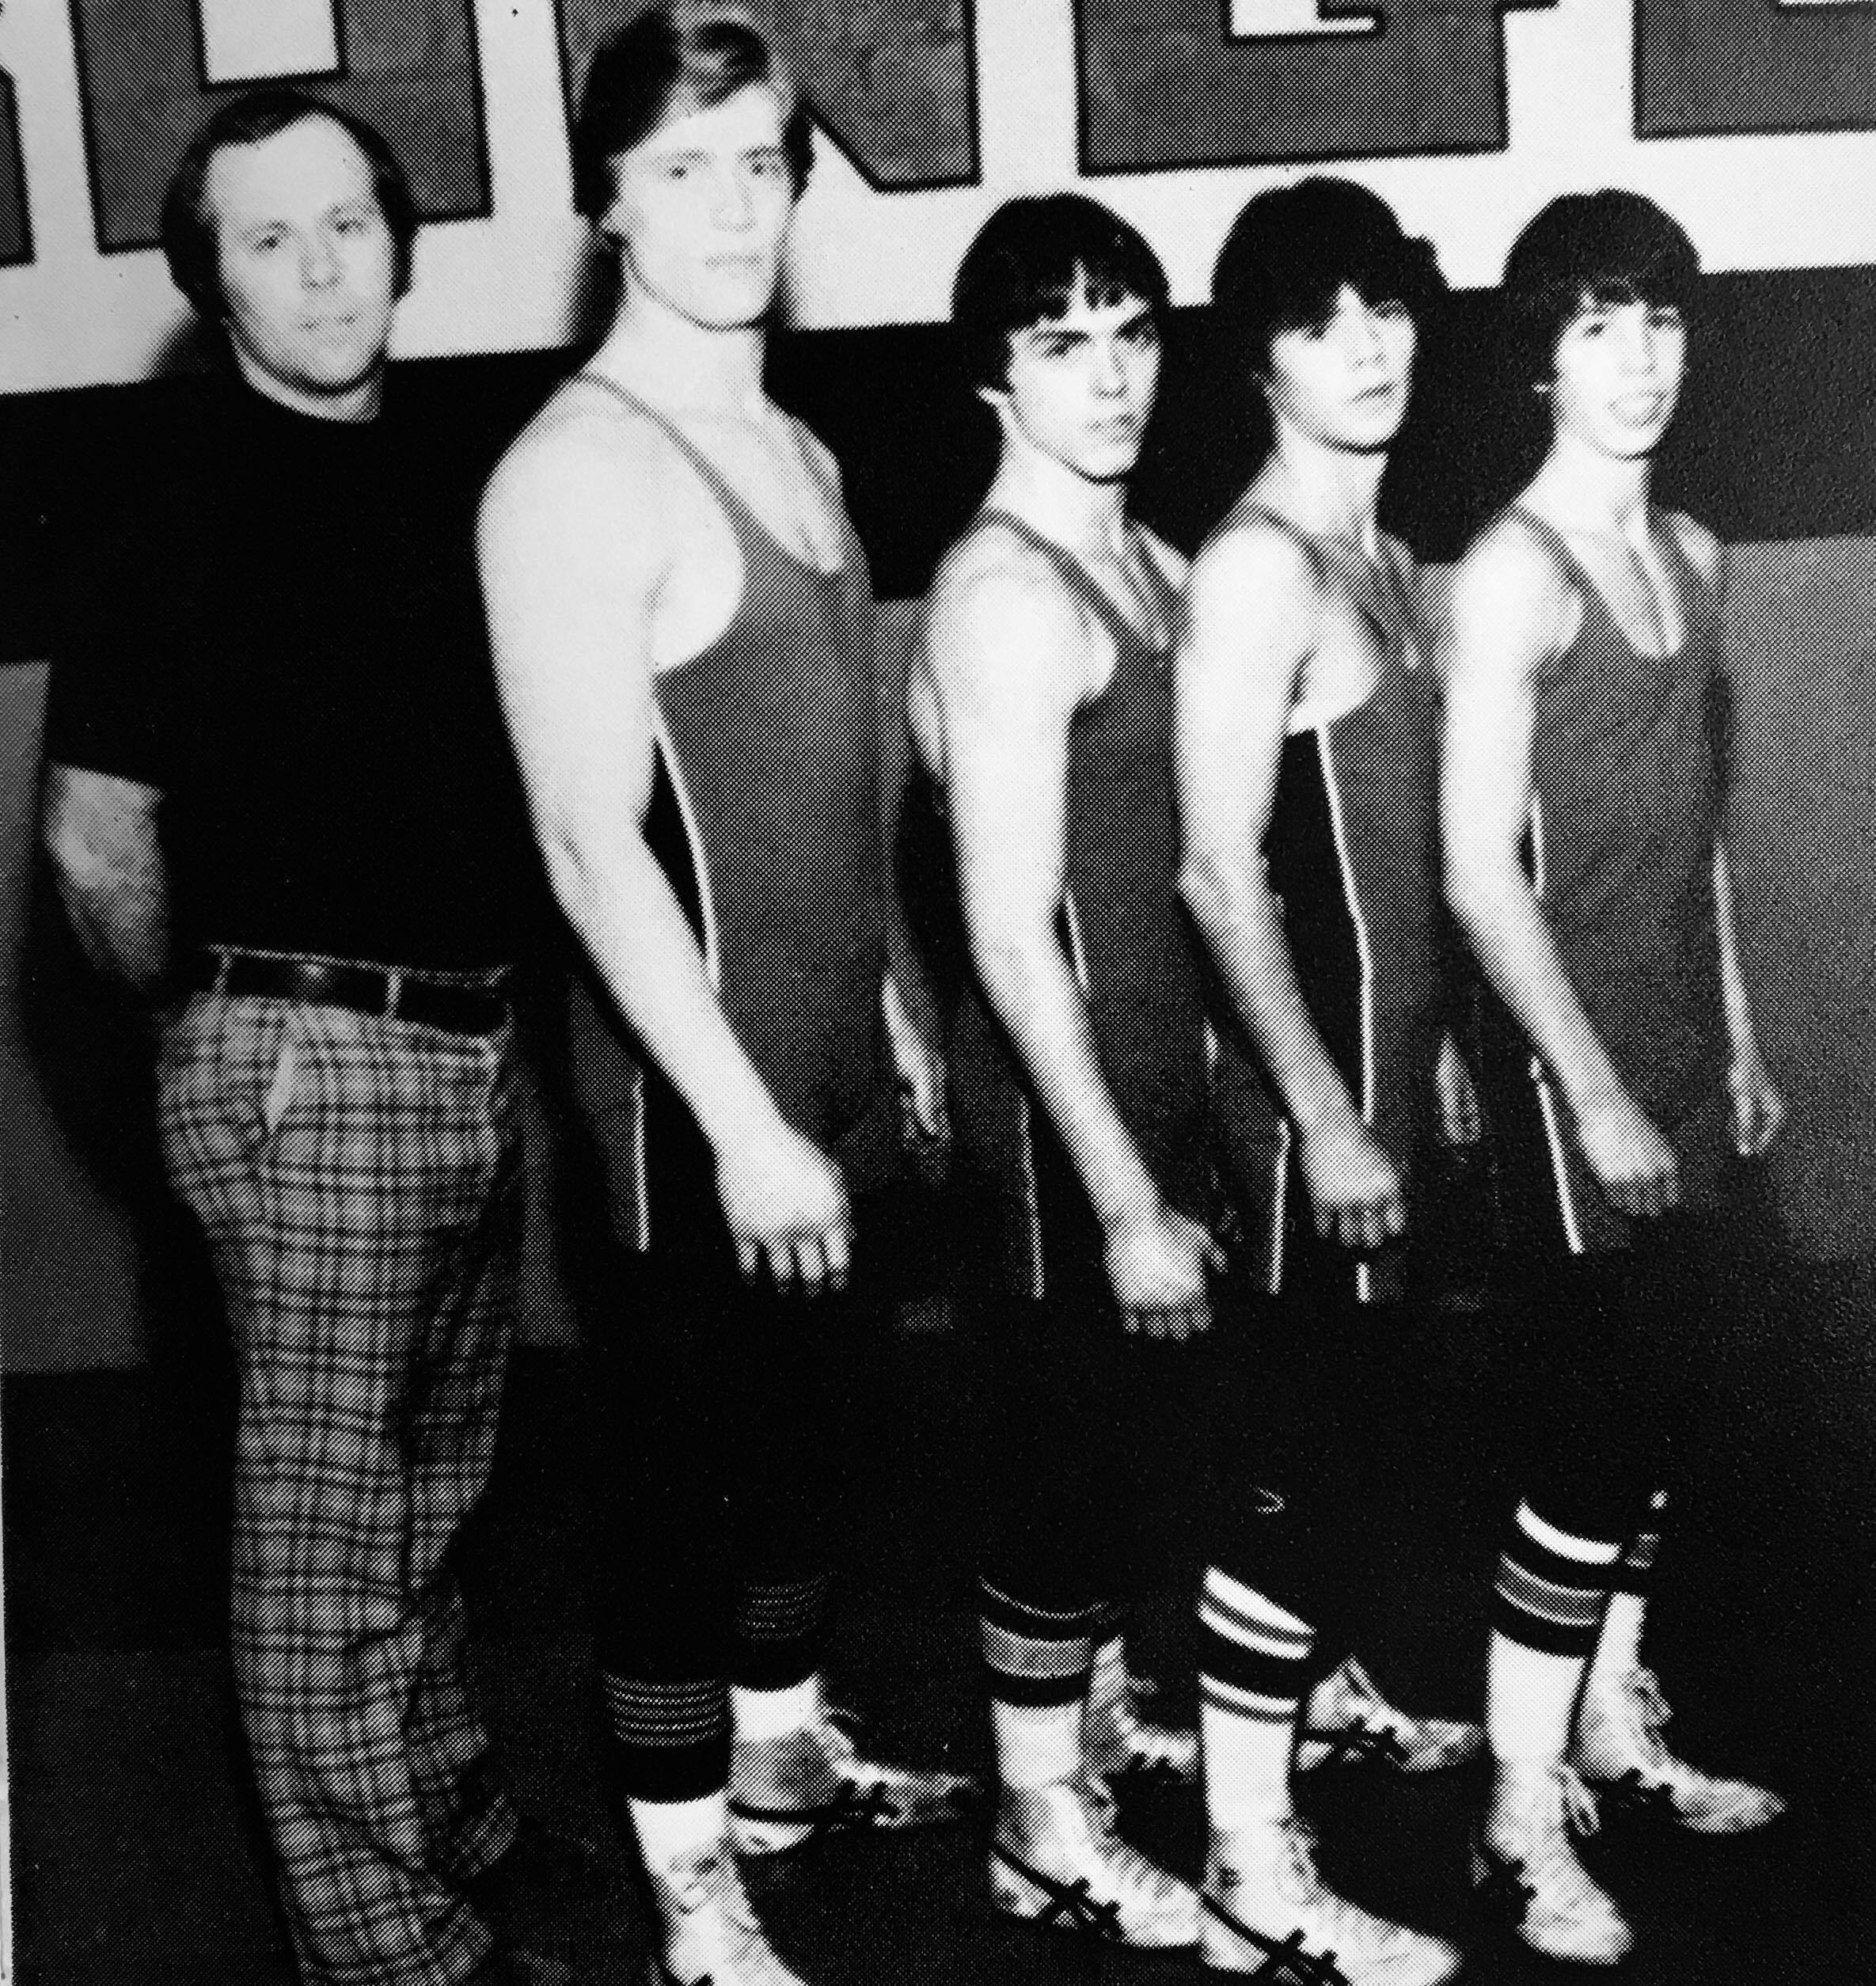 Coach Walek and the Seniors left to right: Coach Walek, Roger Bautch, Gary Steinke, Al Phillipson and Dave Gardner.